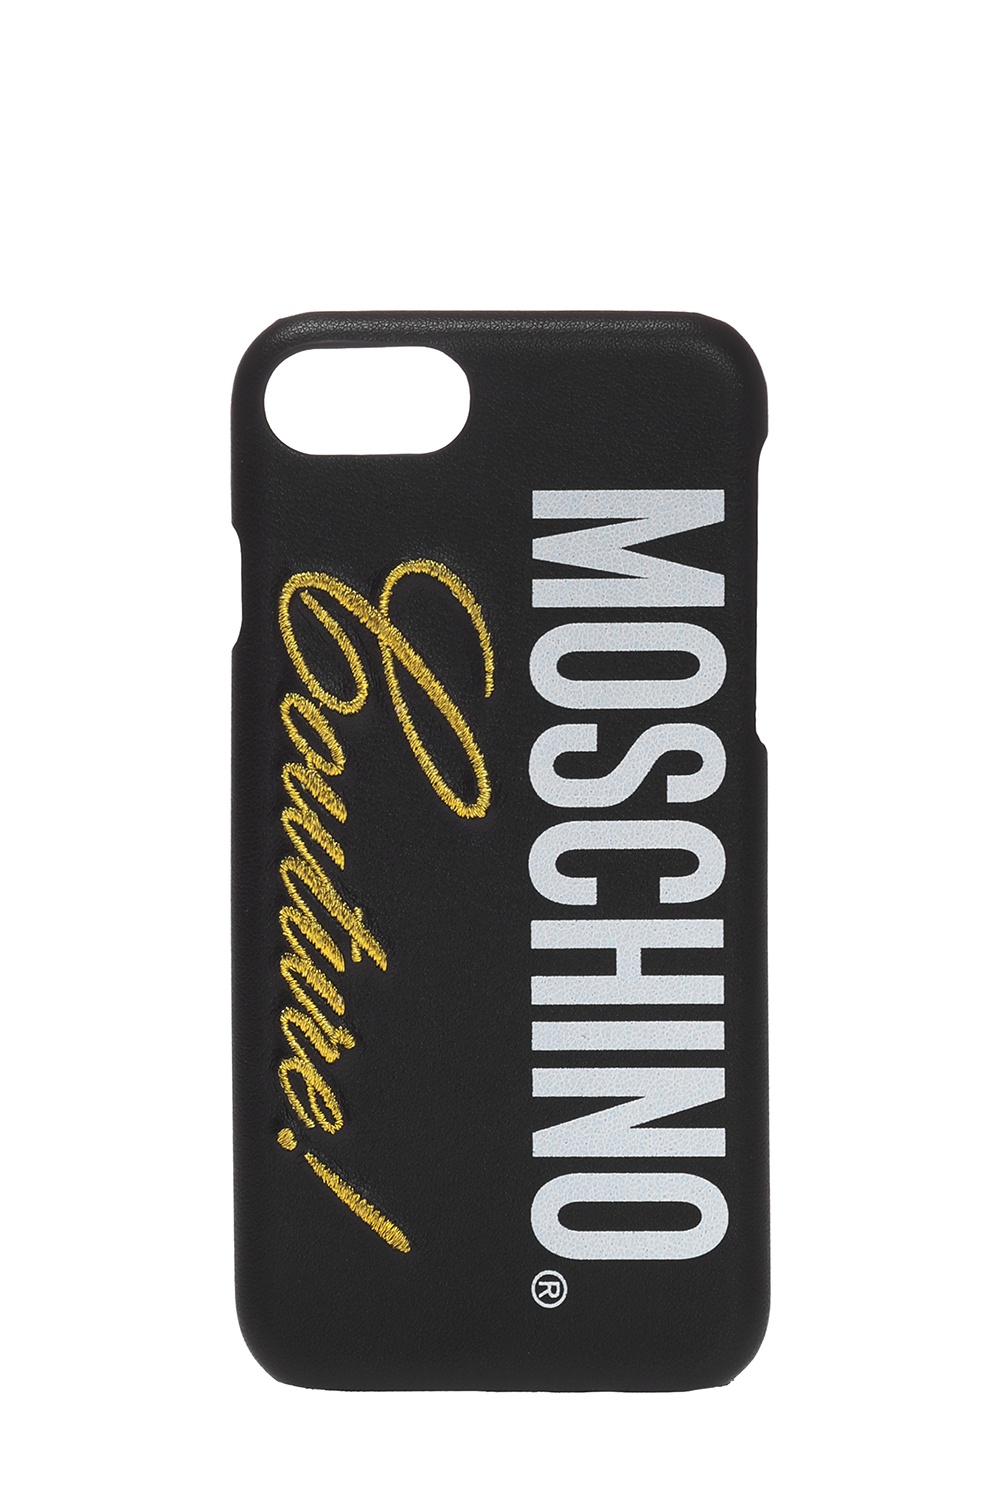 moschino case iphone 6